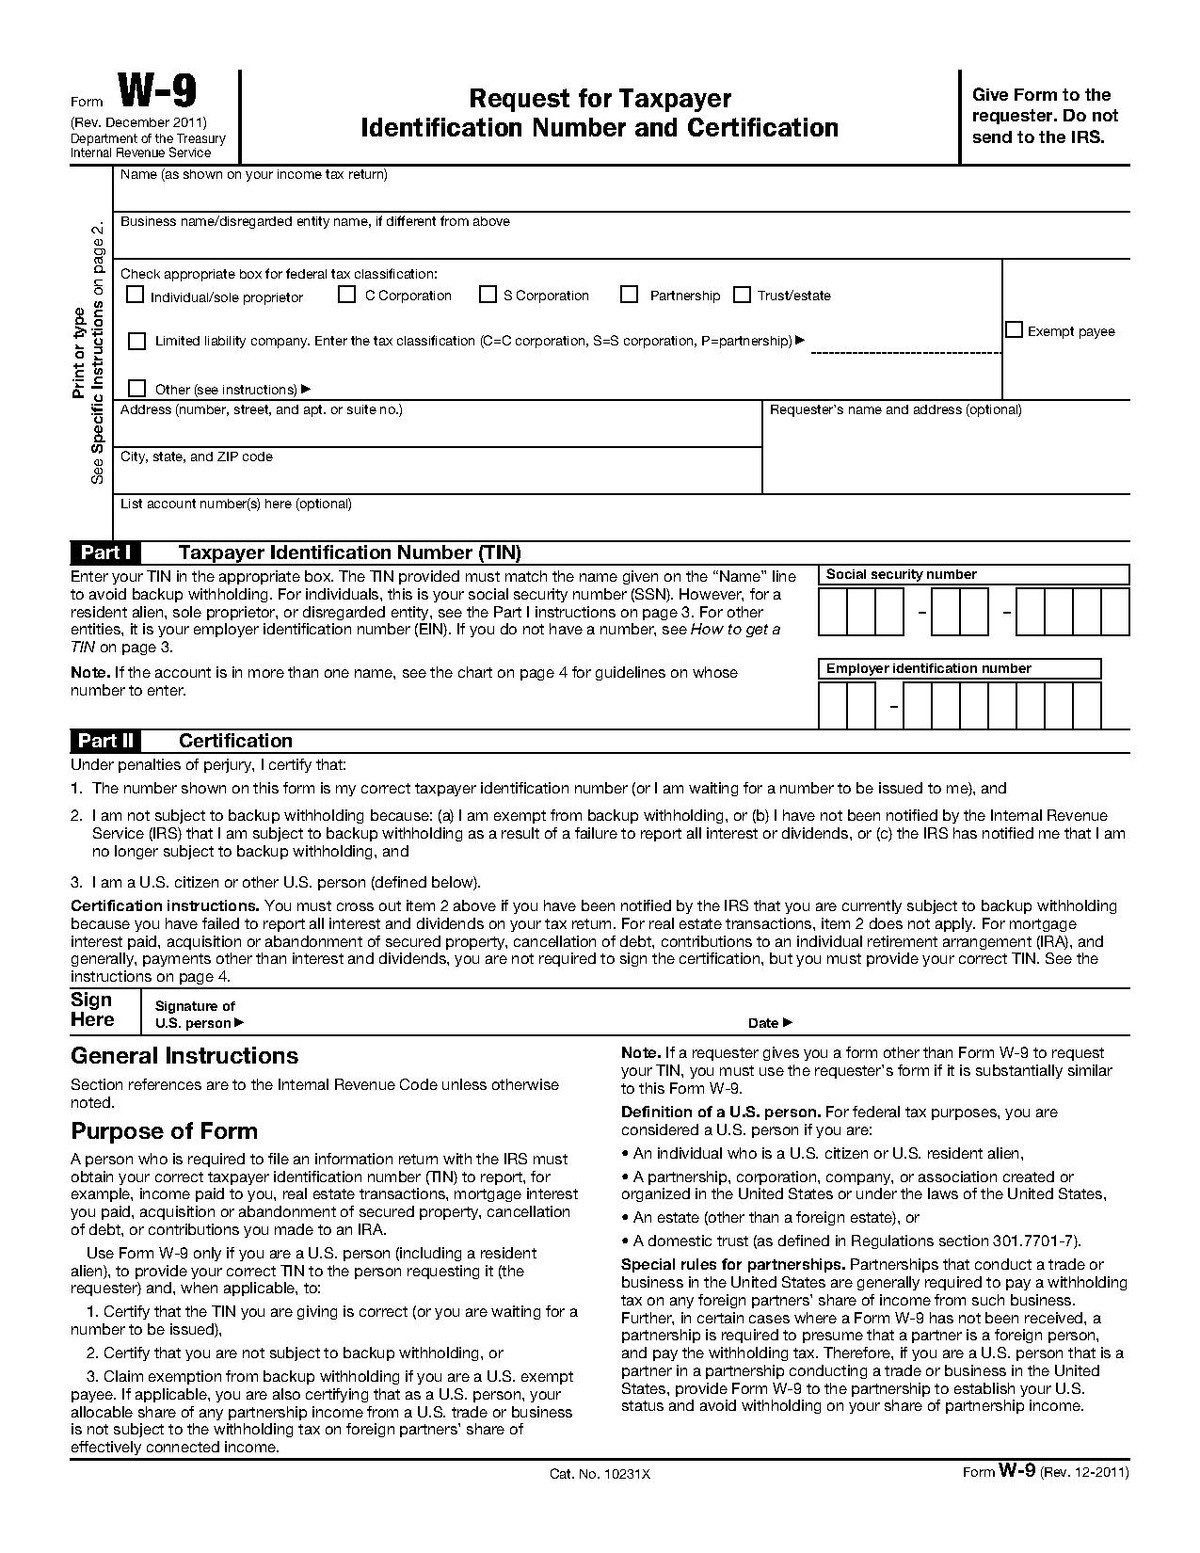 W-9 Form 2021 Printable Pdf | Calendar Printables Free Blank-2021 W-9 Form Printable Pdf